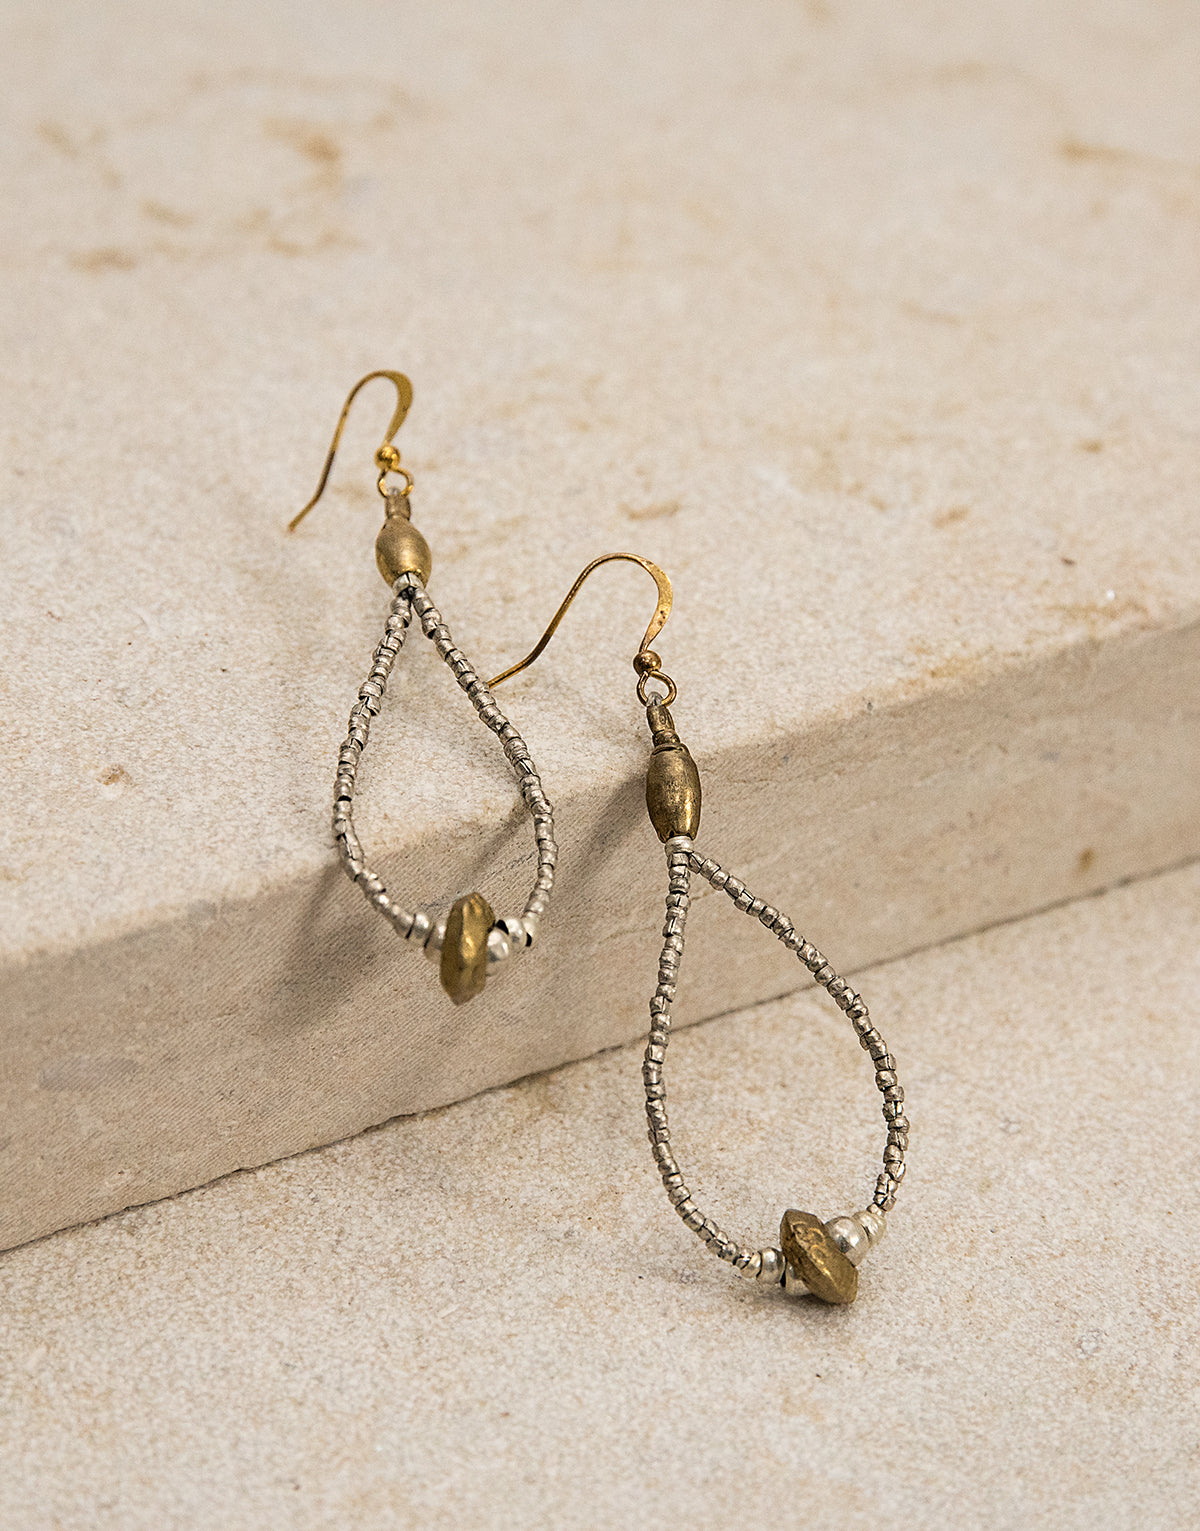 ethiopia-beads-artillery shells-artisan-handmade-entoto mountain-earrings-jewellery-silver-gold